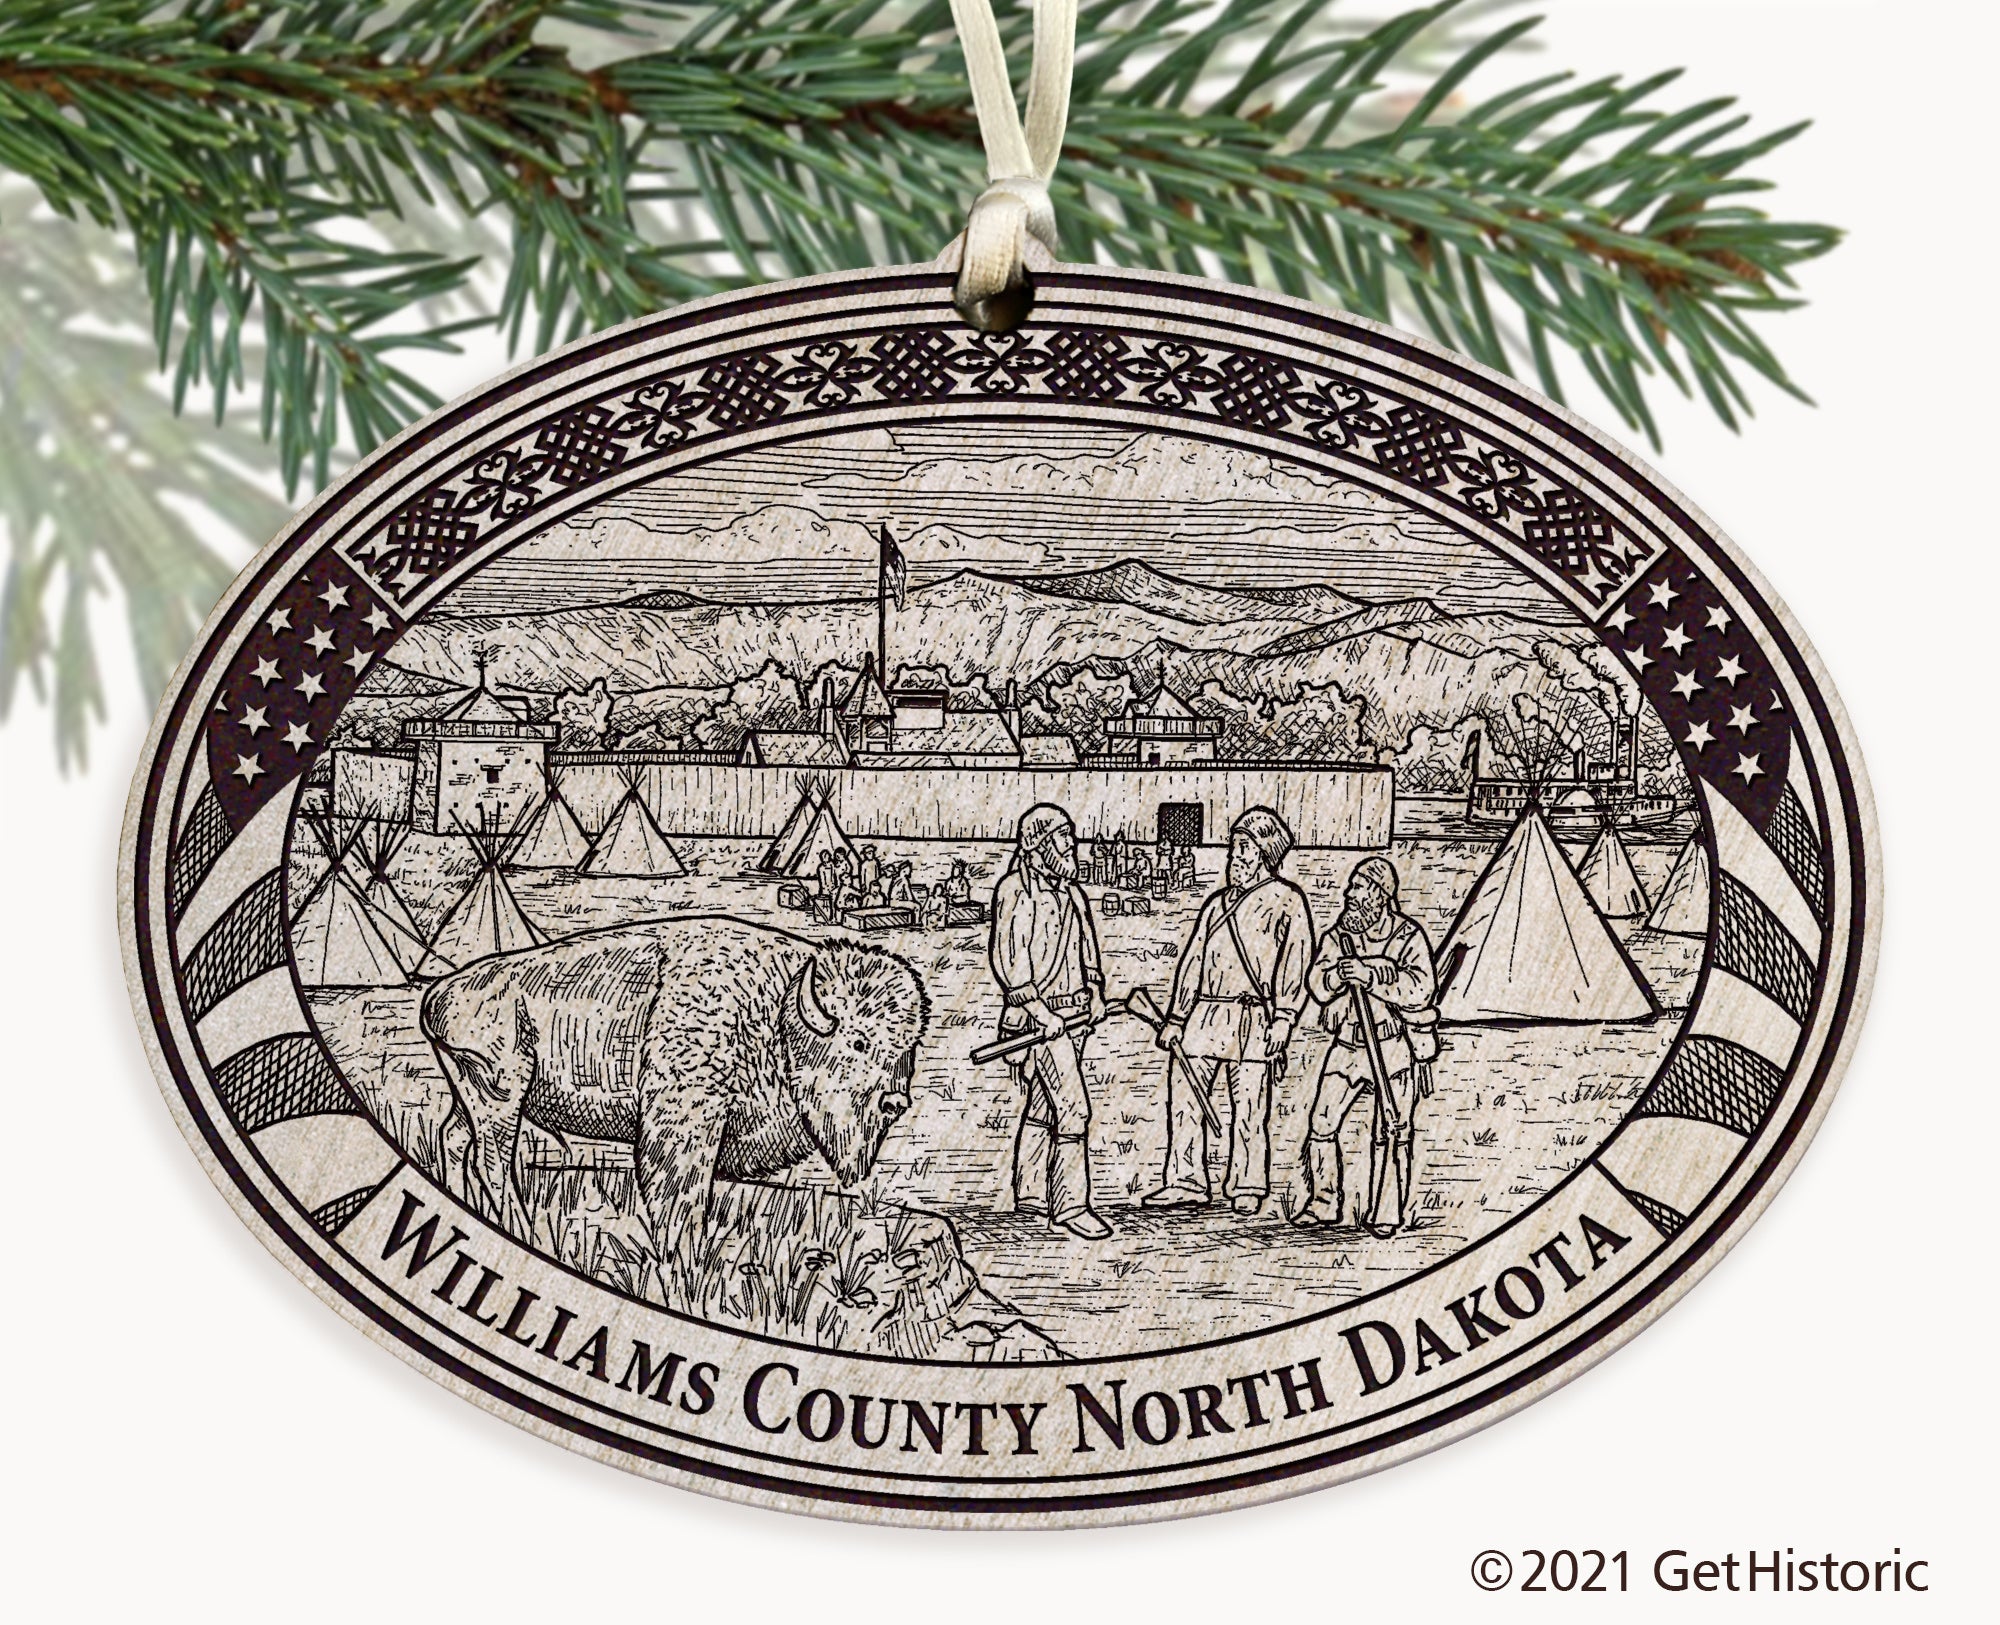 Williams County North Dakota Engraved Ornament